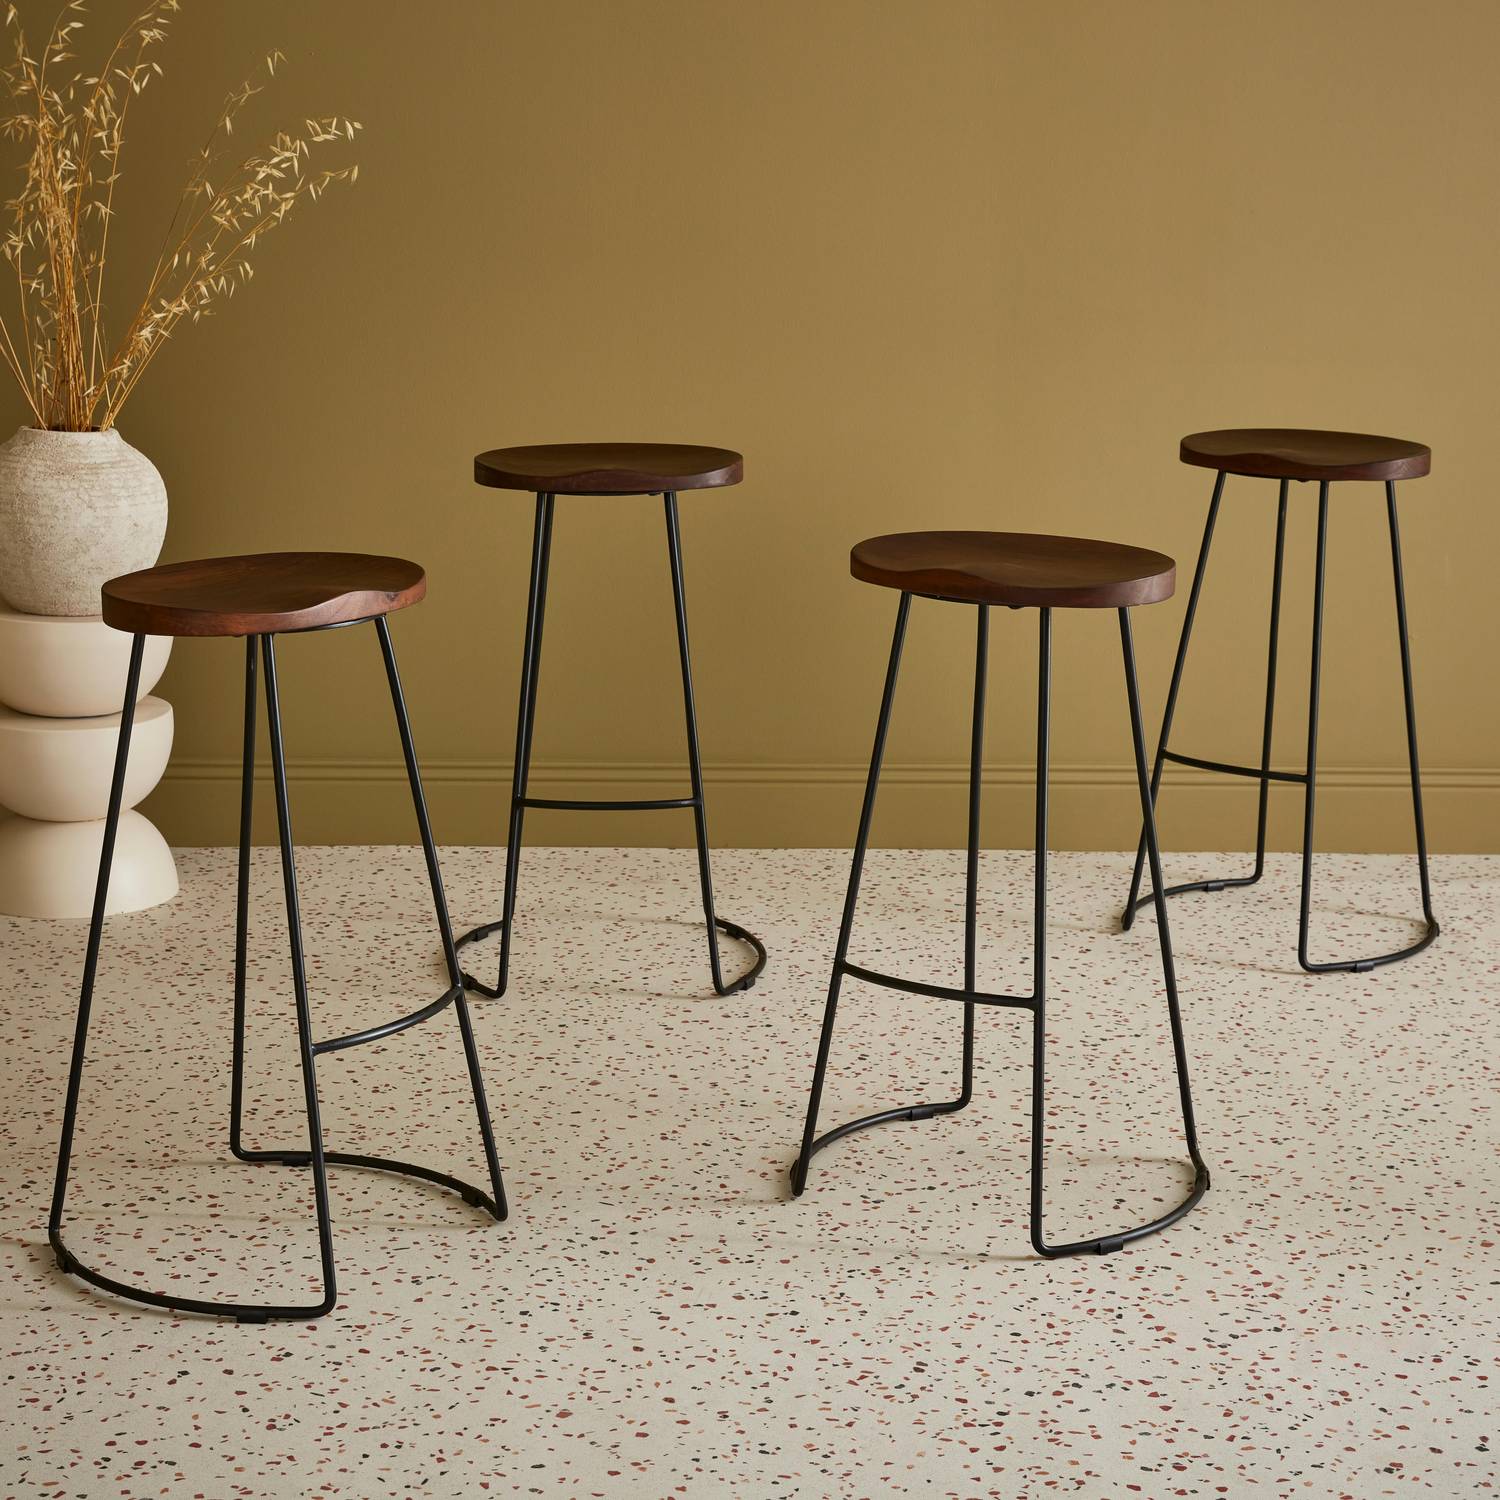 Set of 4 industrial metal and wooden bar stools, 47x40x75cm, Jaya, Light Walnut, Mango wood seat, black metal legs Photo1